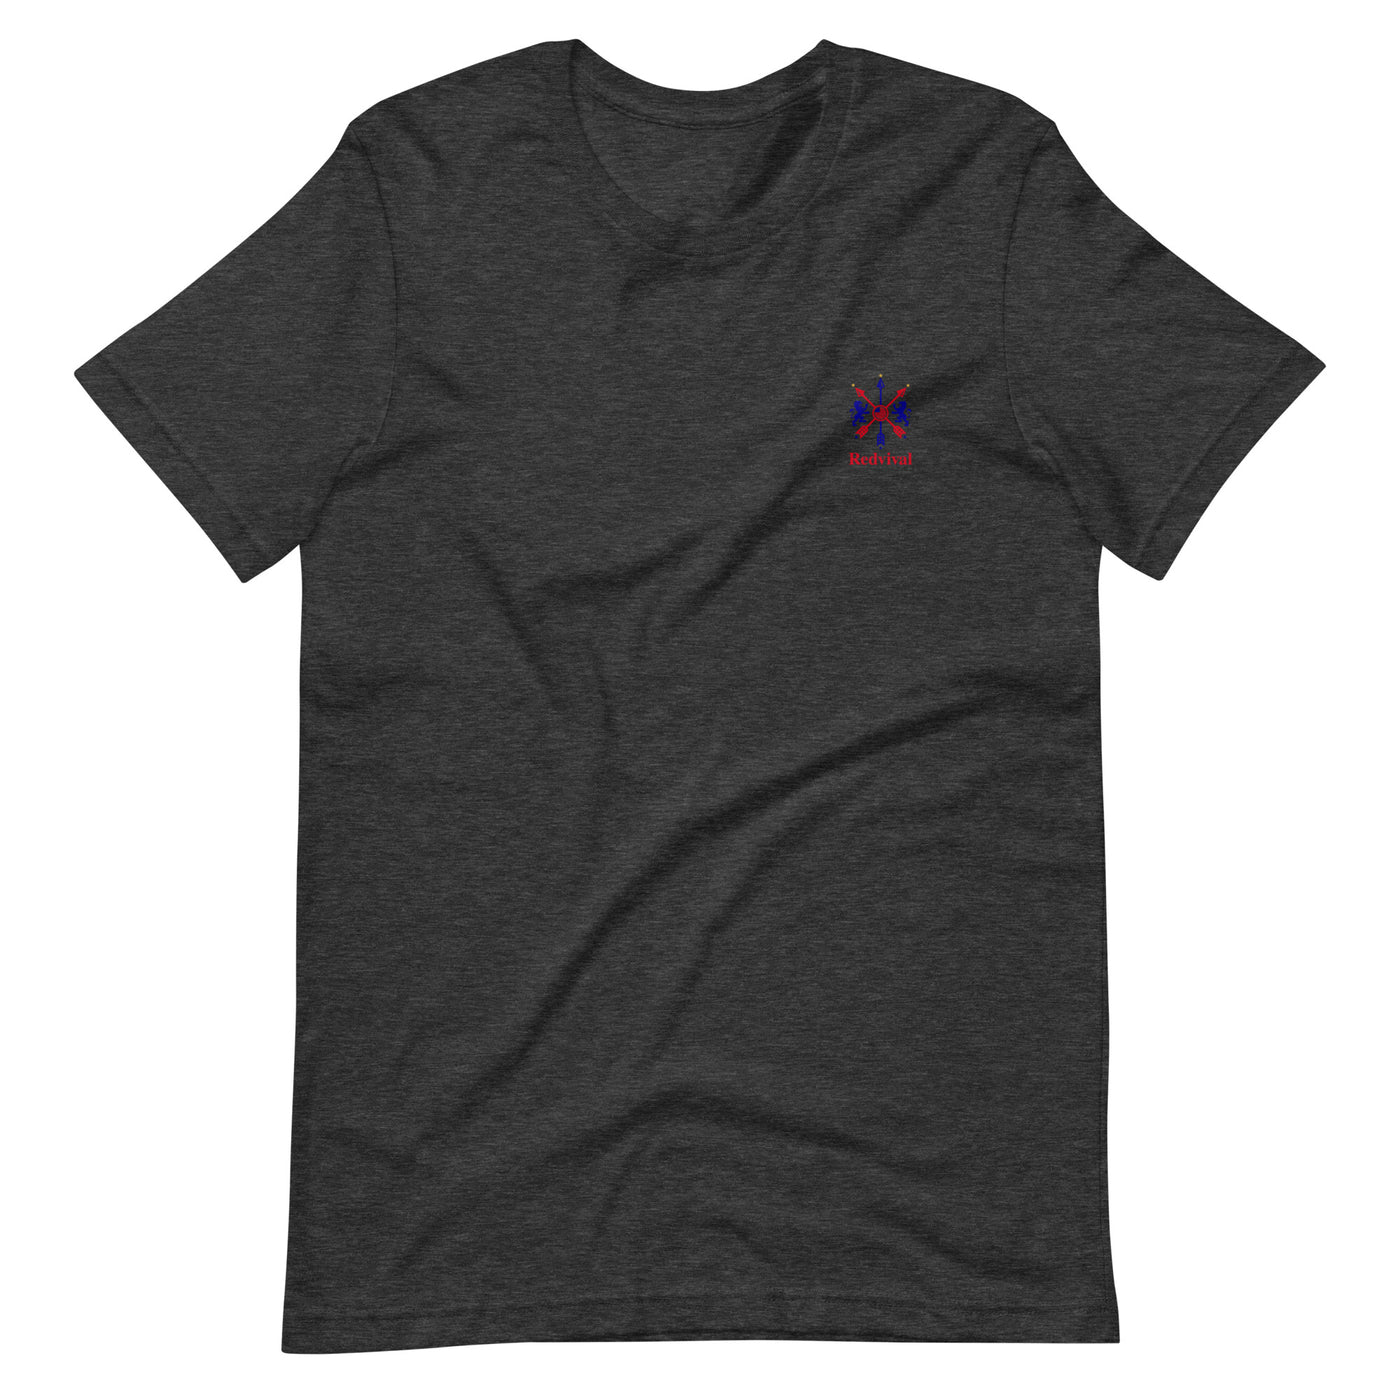 Tarpon - Unisex t-shirt